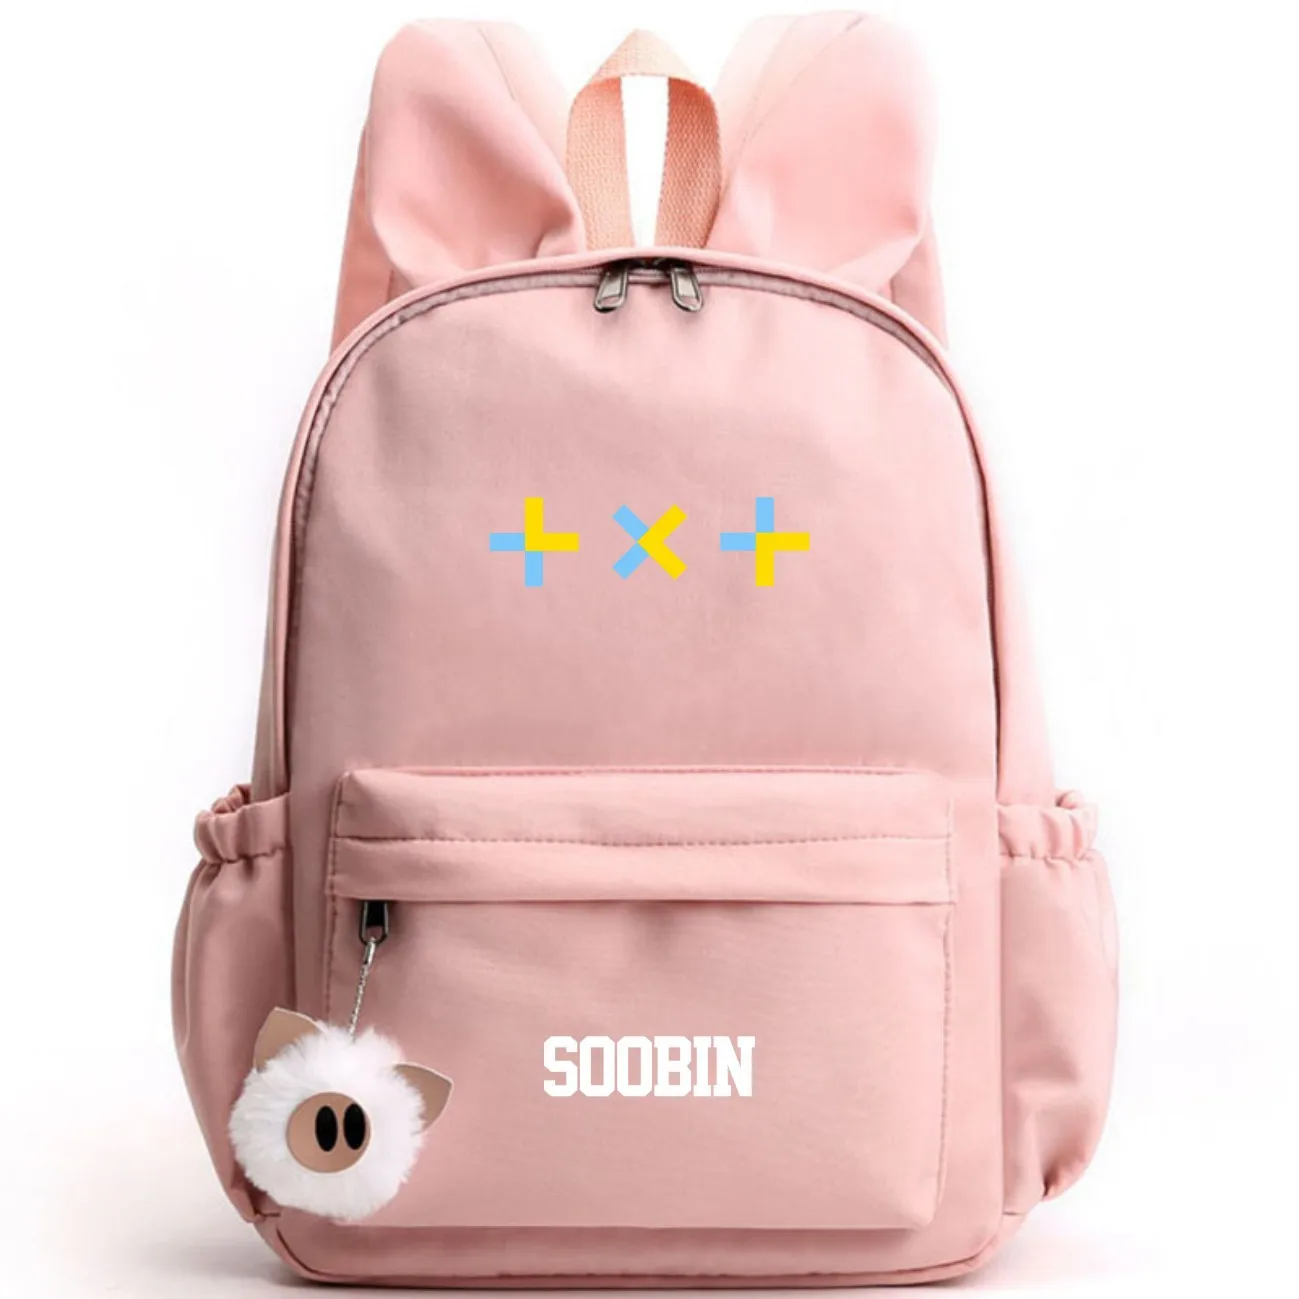 Kpop Group TXT Tomorrow X Together Women Cute Backpack Nylon School Bags for Teenage Girls Pink Bookbag Kawaii Small Bagpack